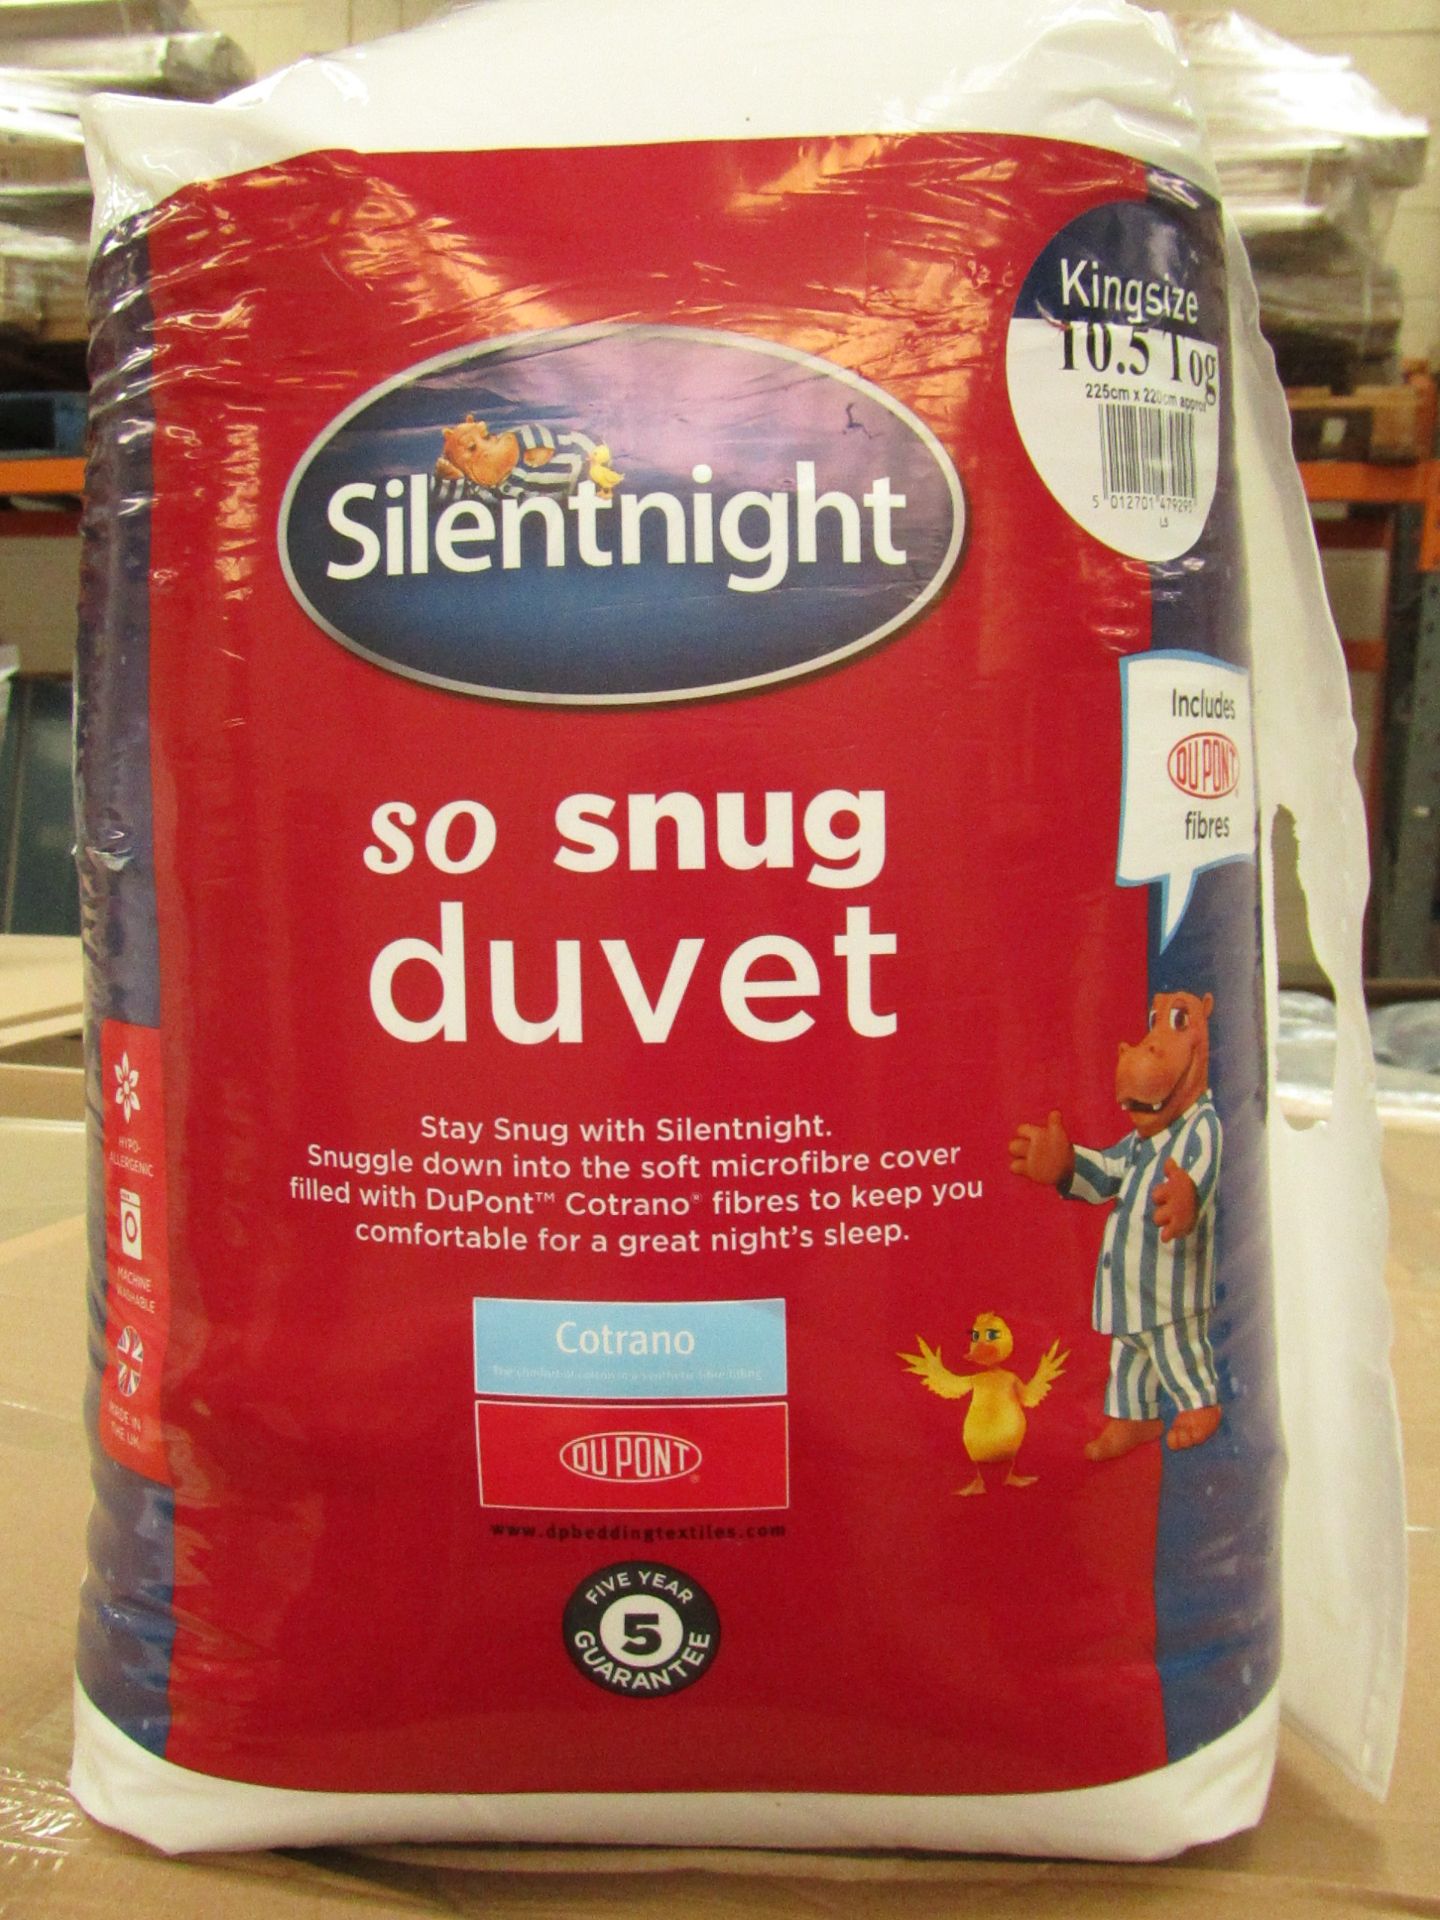 1x Silentnight so snug duvet, 10.5 Tog, king size, new in packaging.